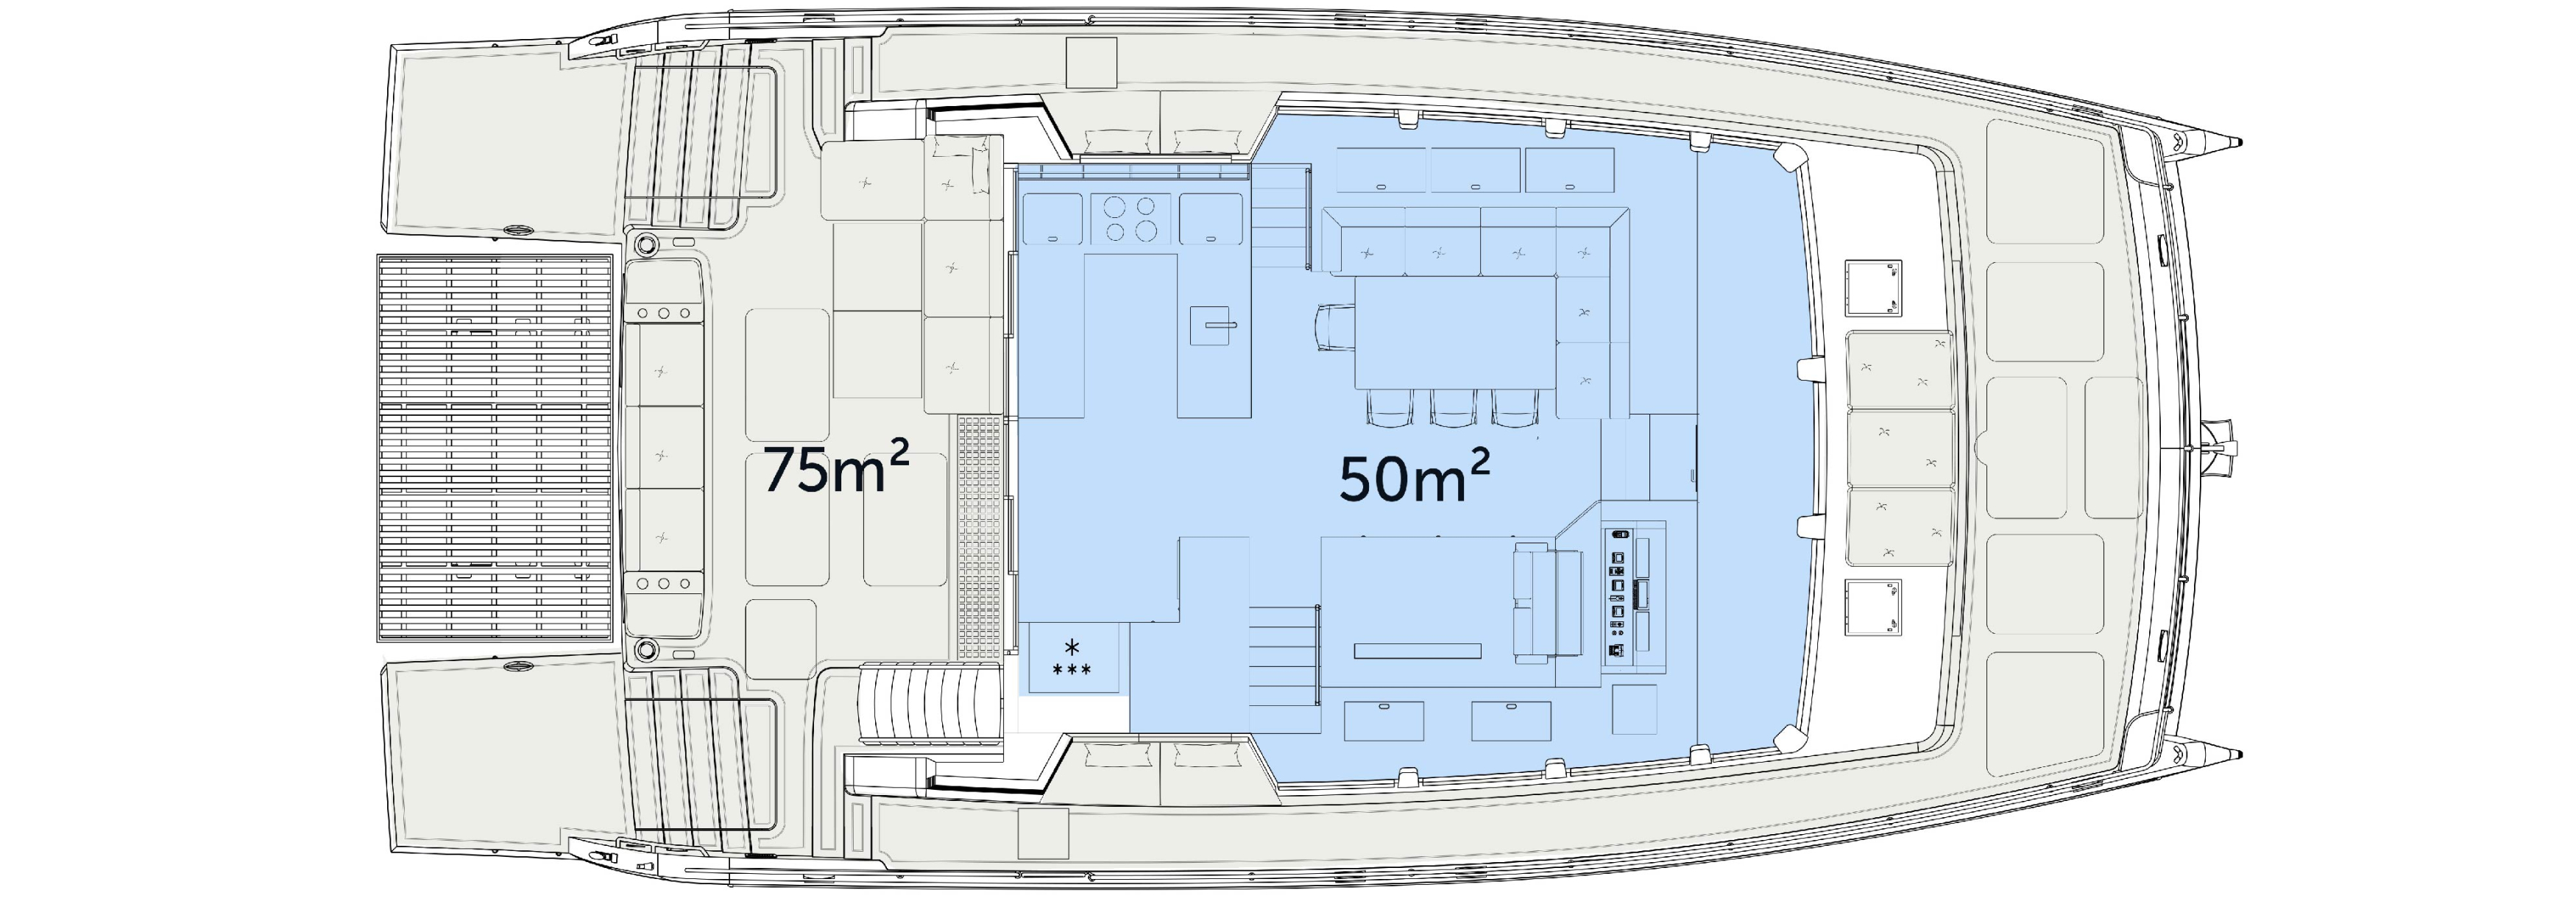 Yacht main deck area plan